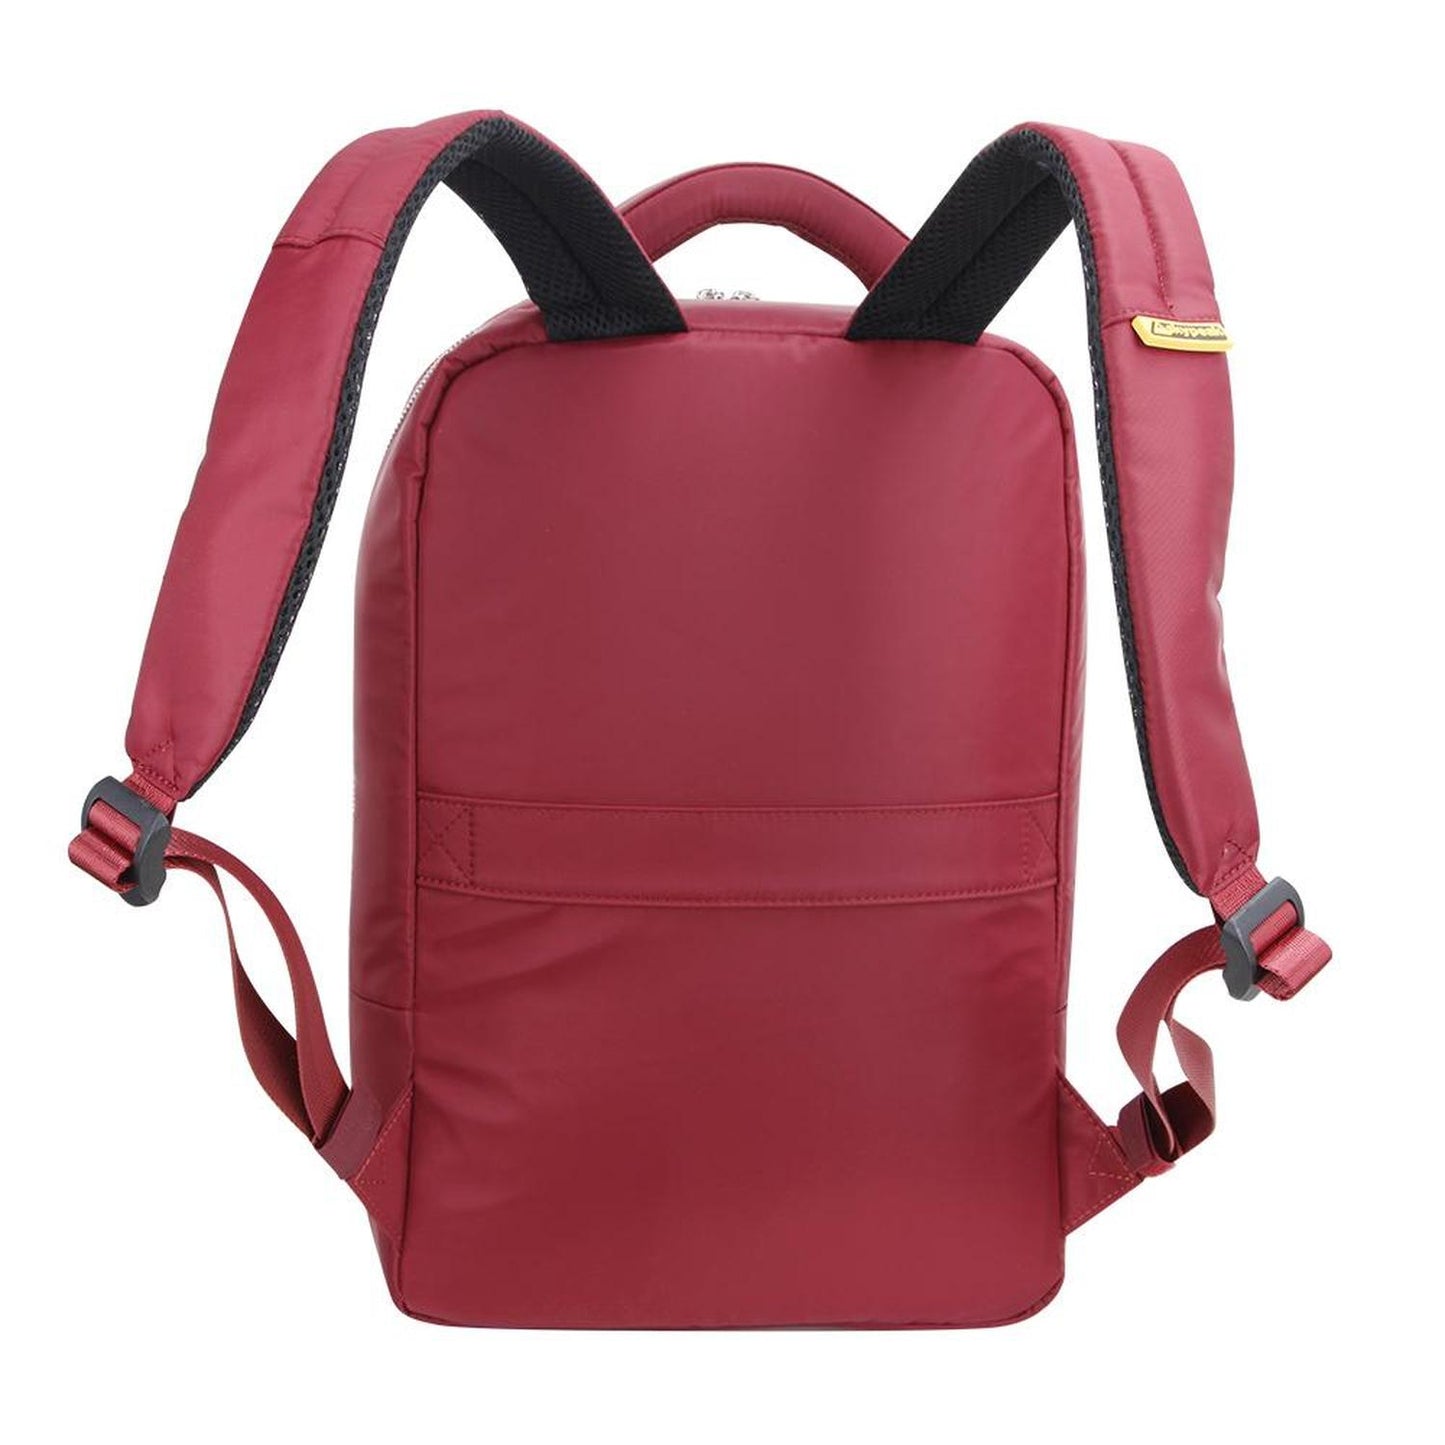 Mochila backpack Skypeak roja para mujer,dama, de 15,6" tamaño Grande. CTA-115PO